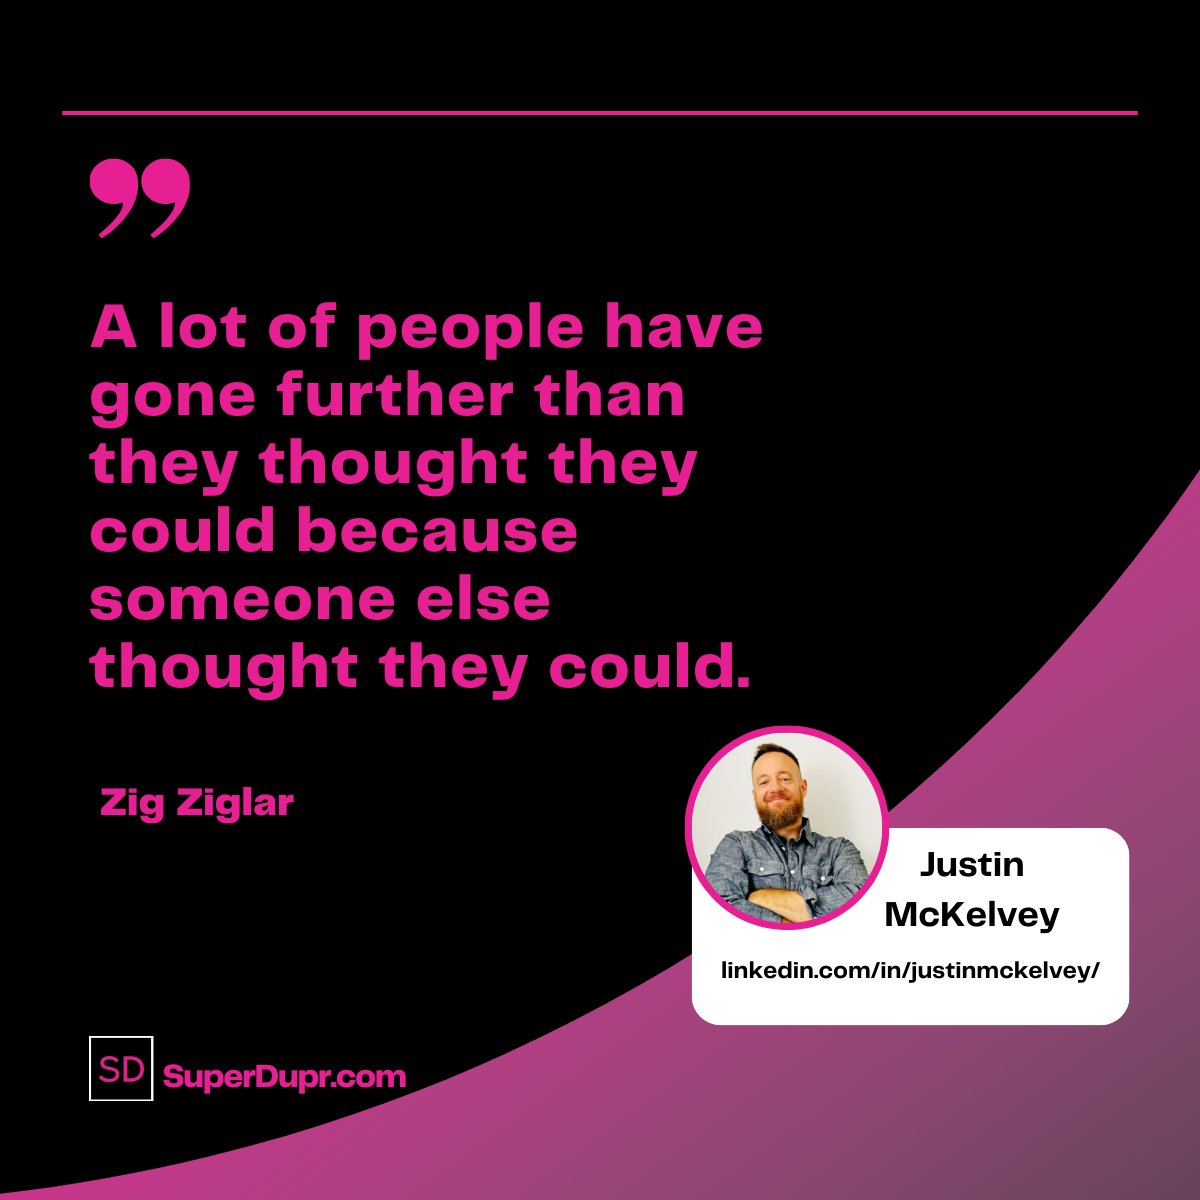 #SuperDupr #ZigZiglar #leadership #people #mondayquotes #quotes #inspiration #motivation #crypto #marketing #webdesign #entrepreneur #crypto #marketing #webdesign #entrepreneur